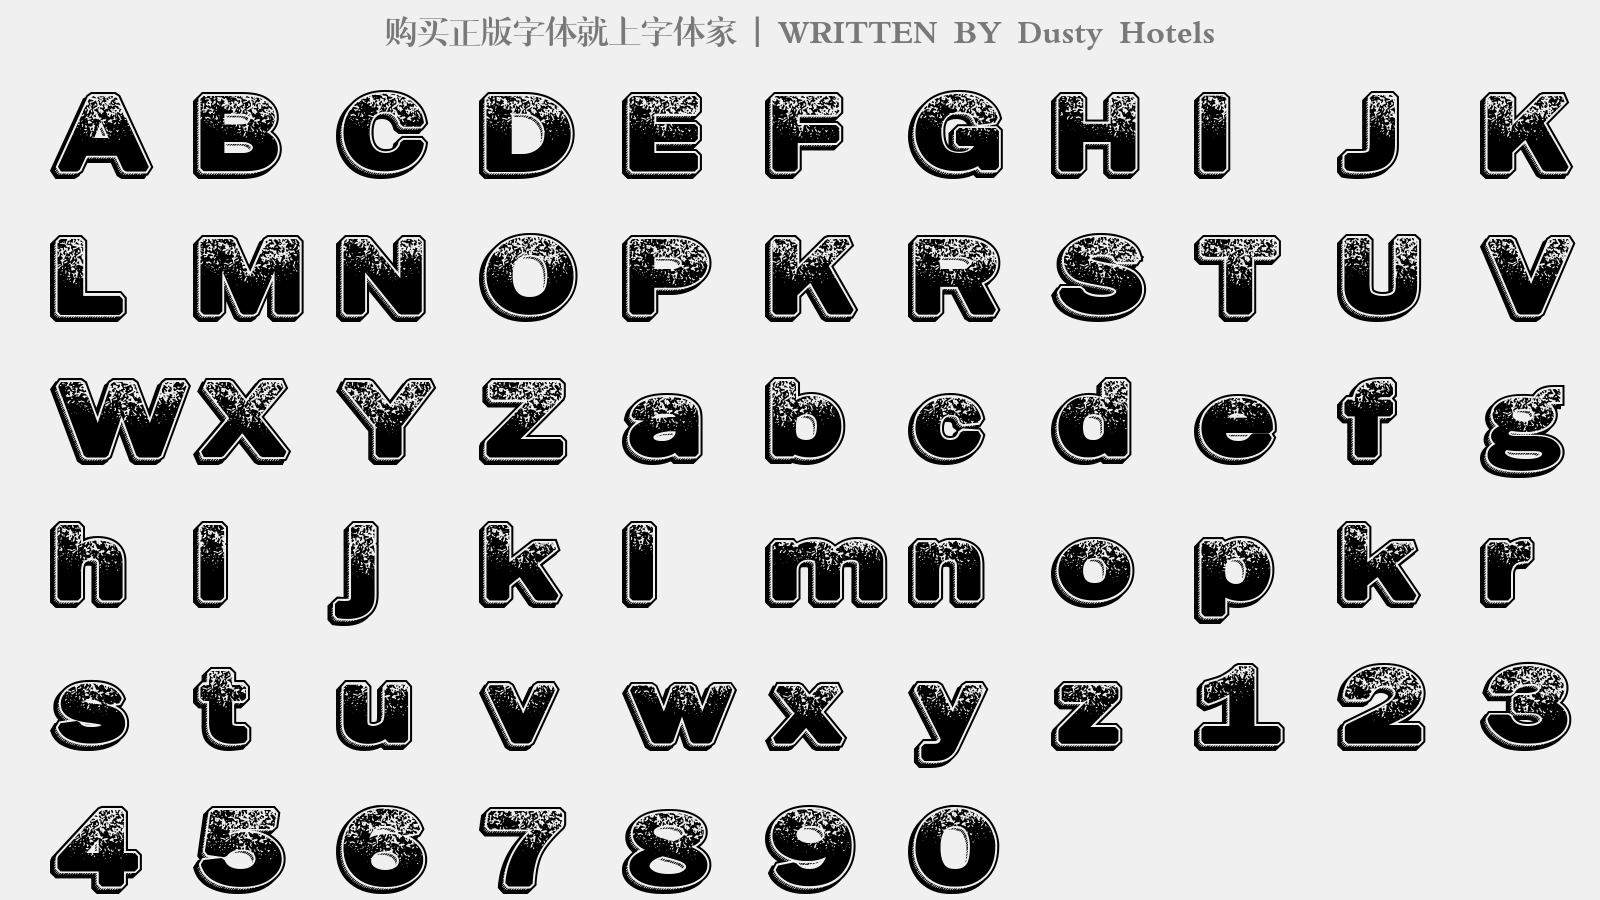 Dusty Hotels - 大写字母/小写字母/数字